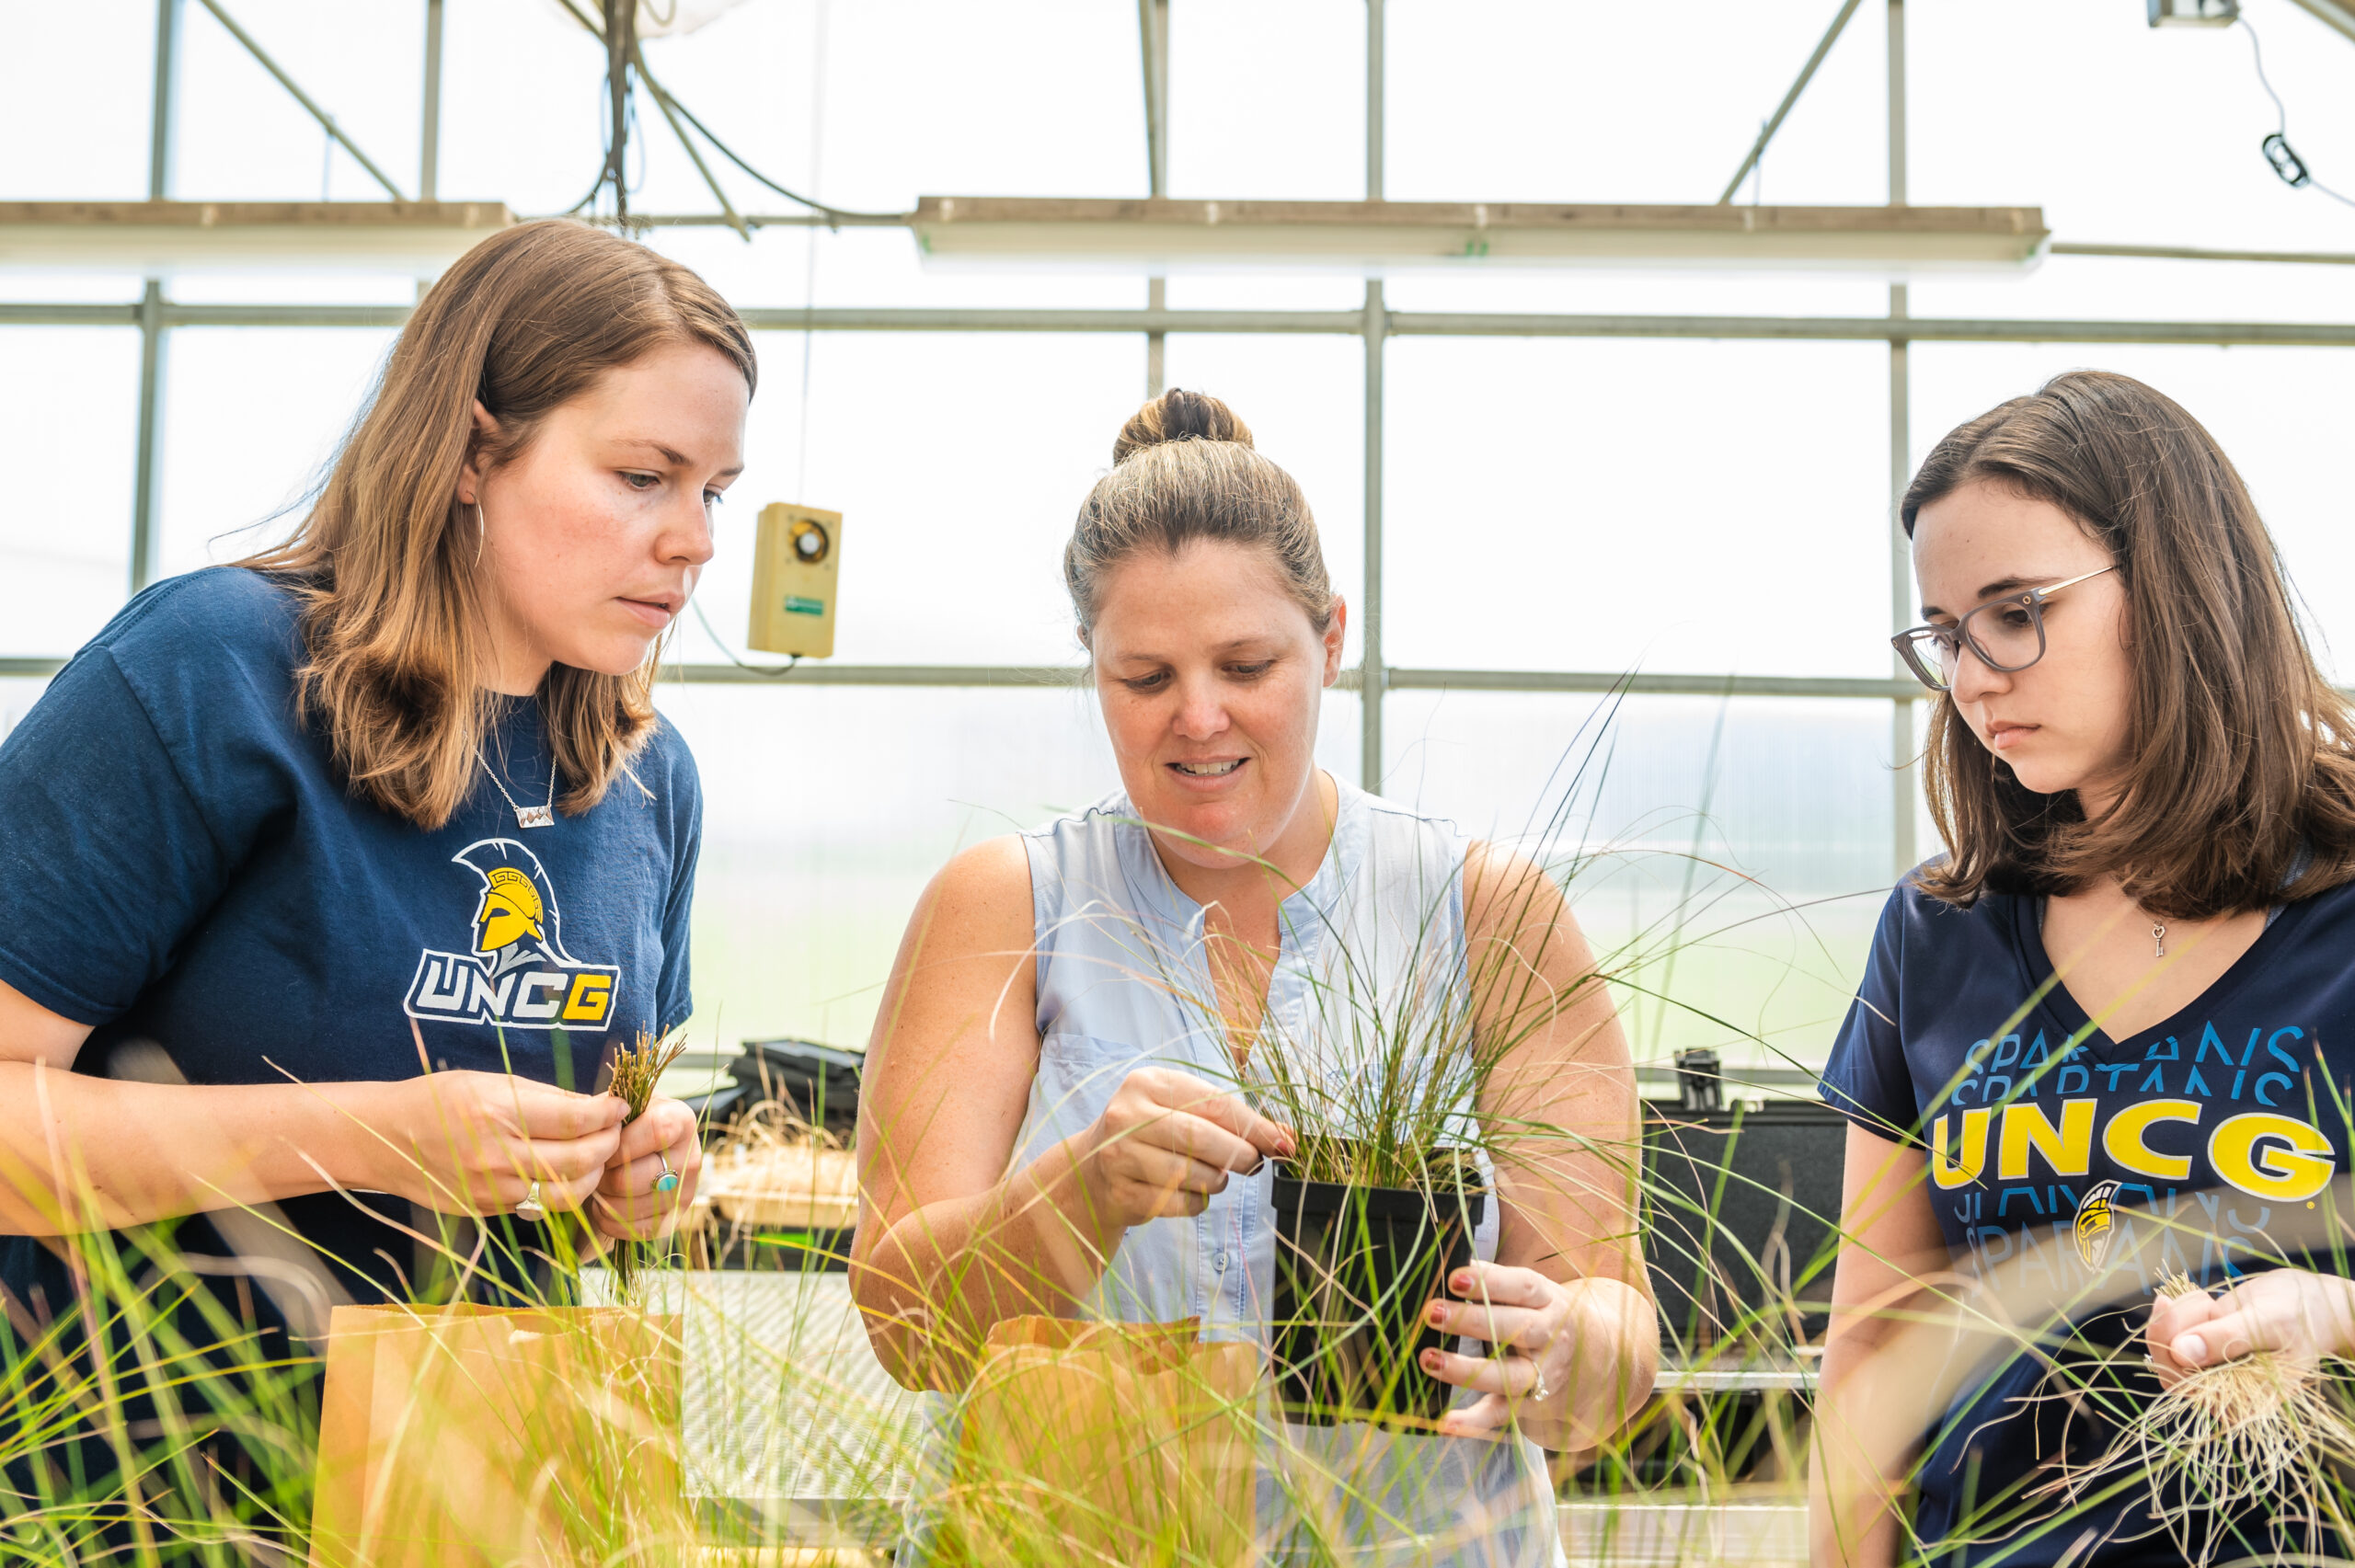 Three women study grasses in a greenhouse.